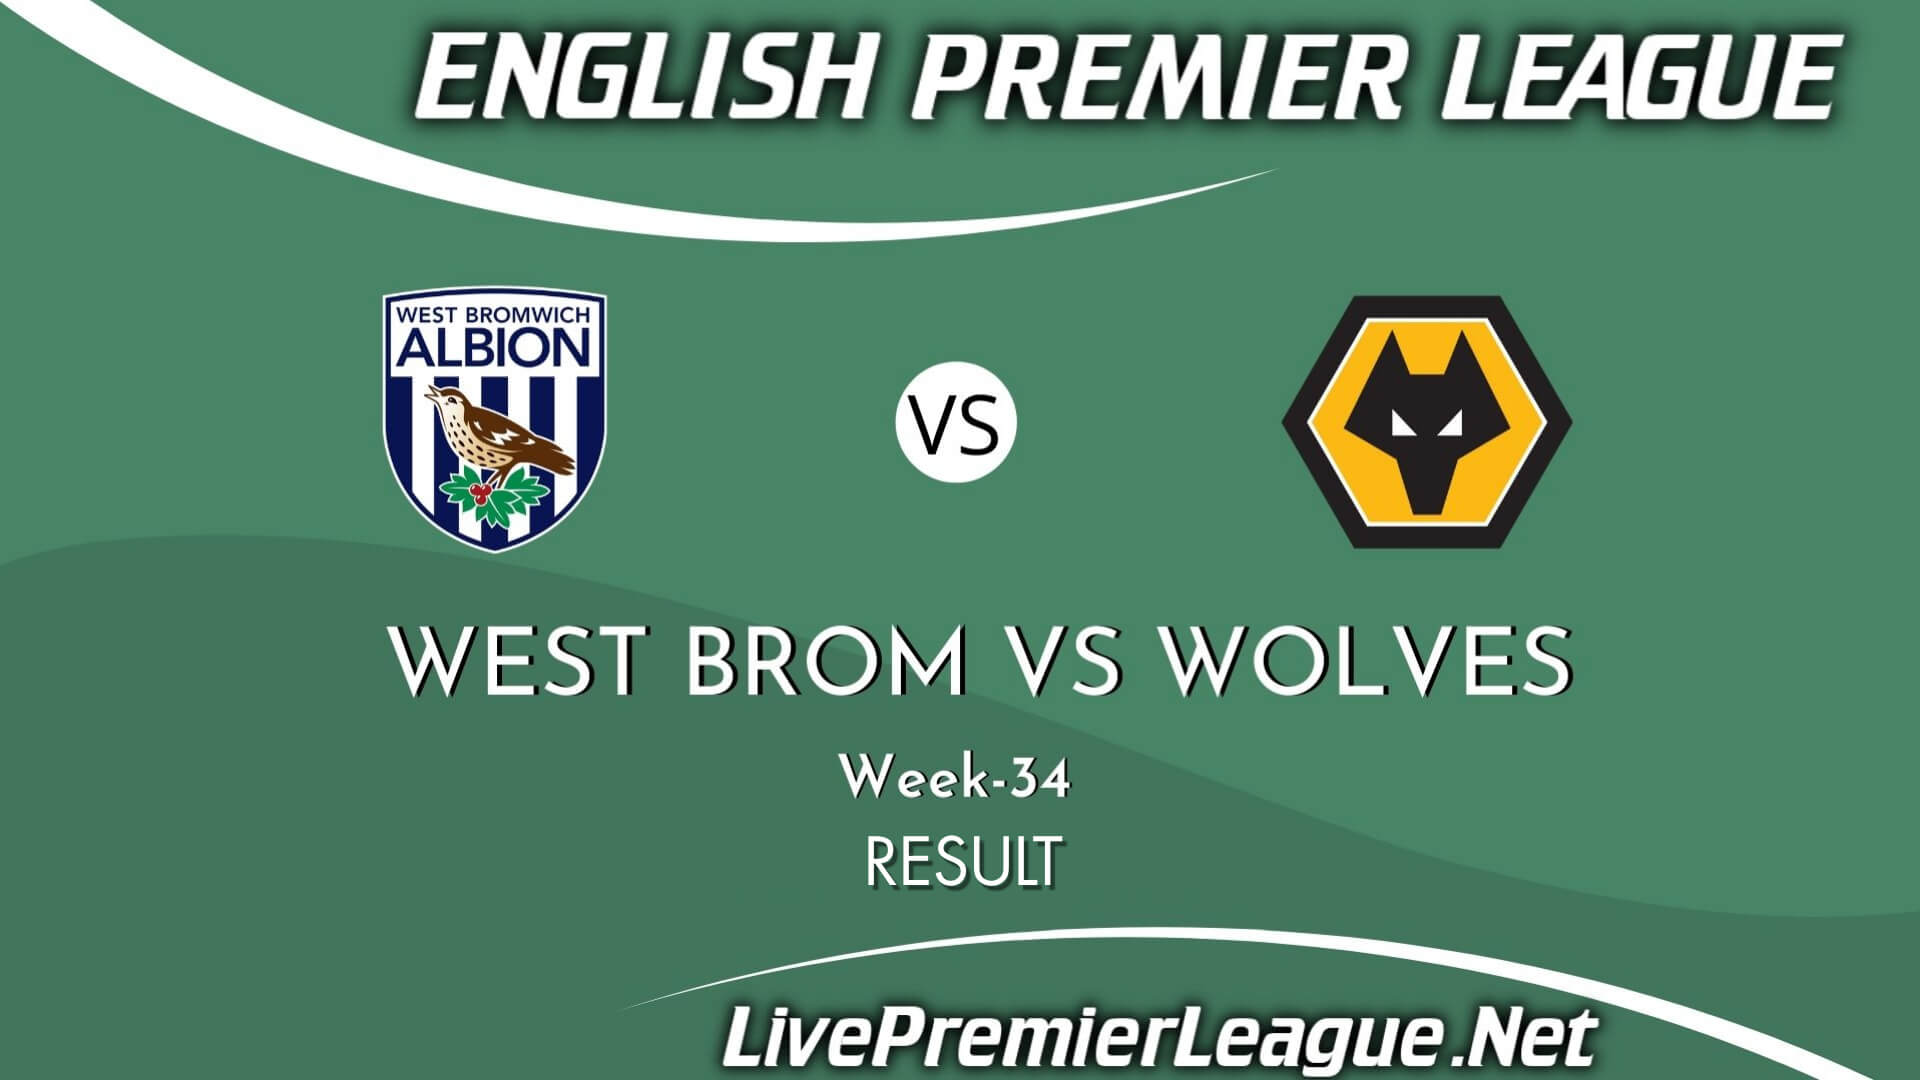 West Brom Vs Wolves Result 2021 | EPL Week 34